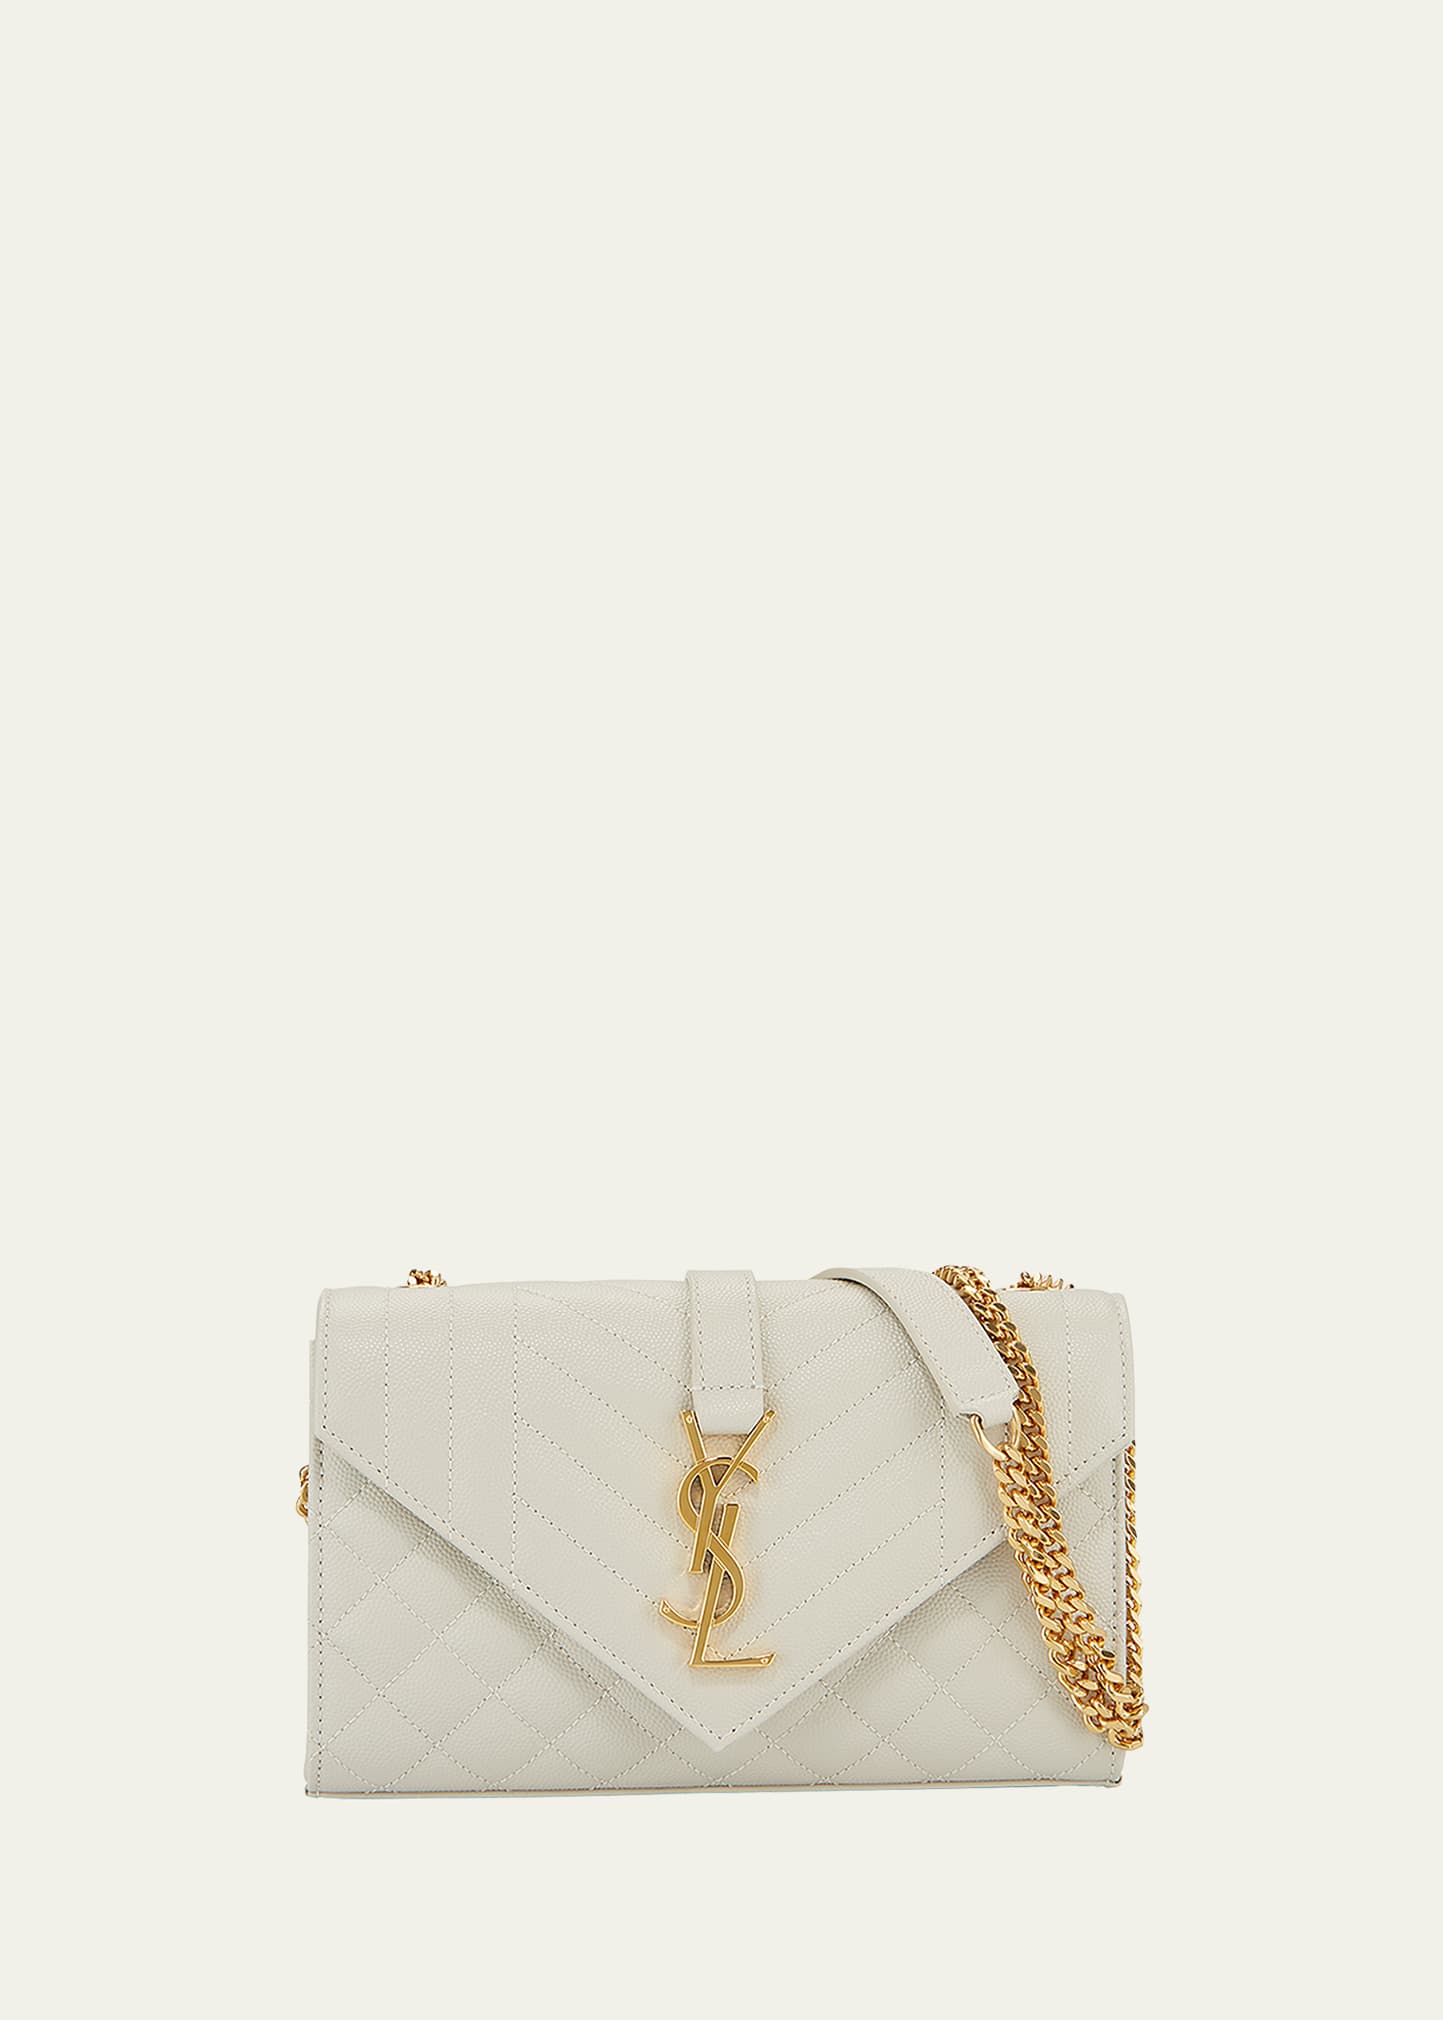 Saint Laurent Small Ysl Monogram Leather Satchel Bag In White